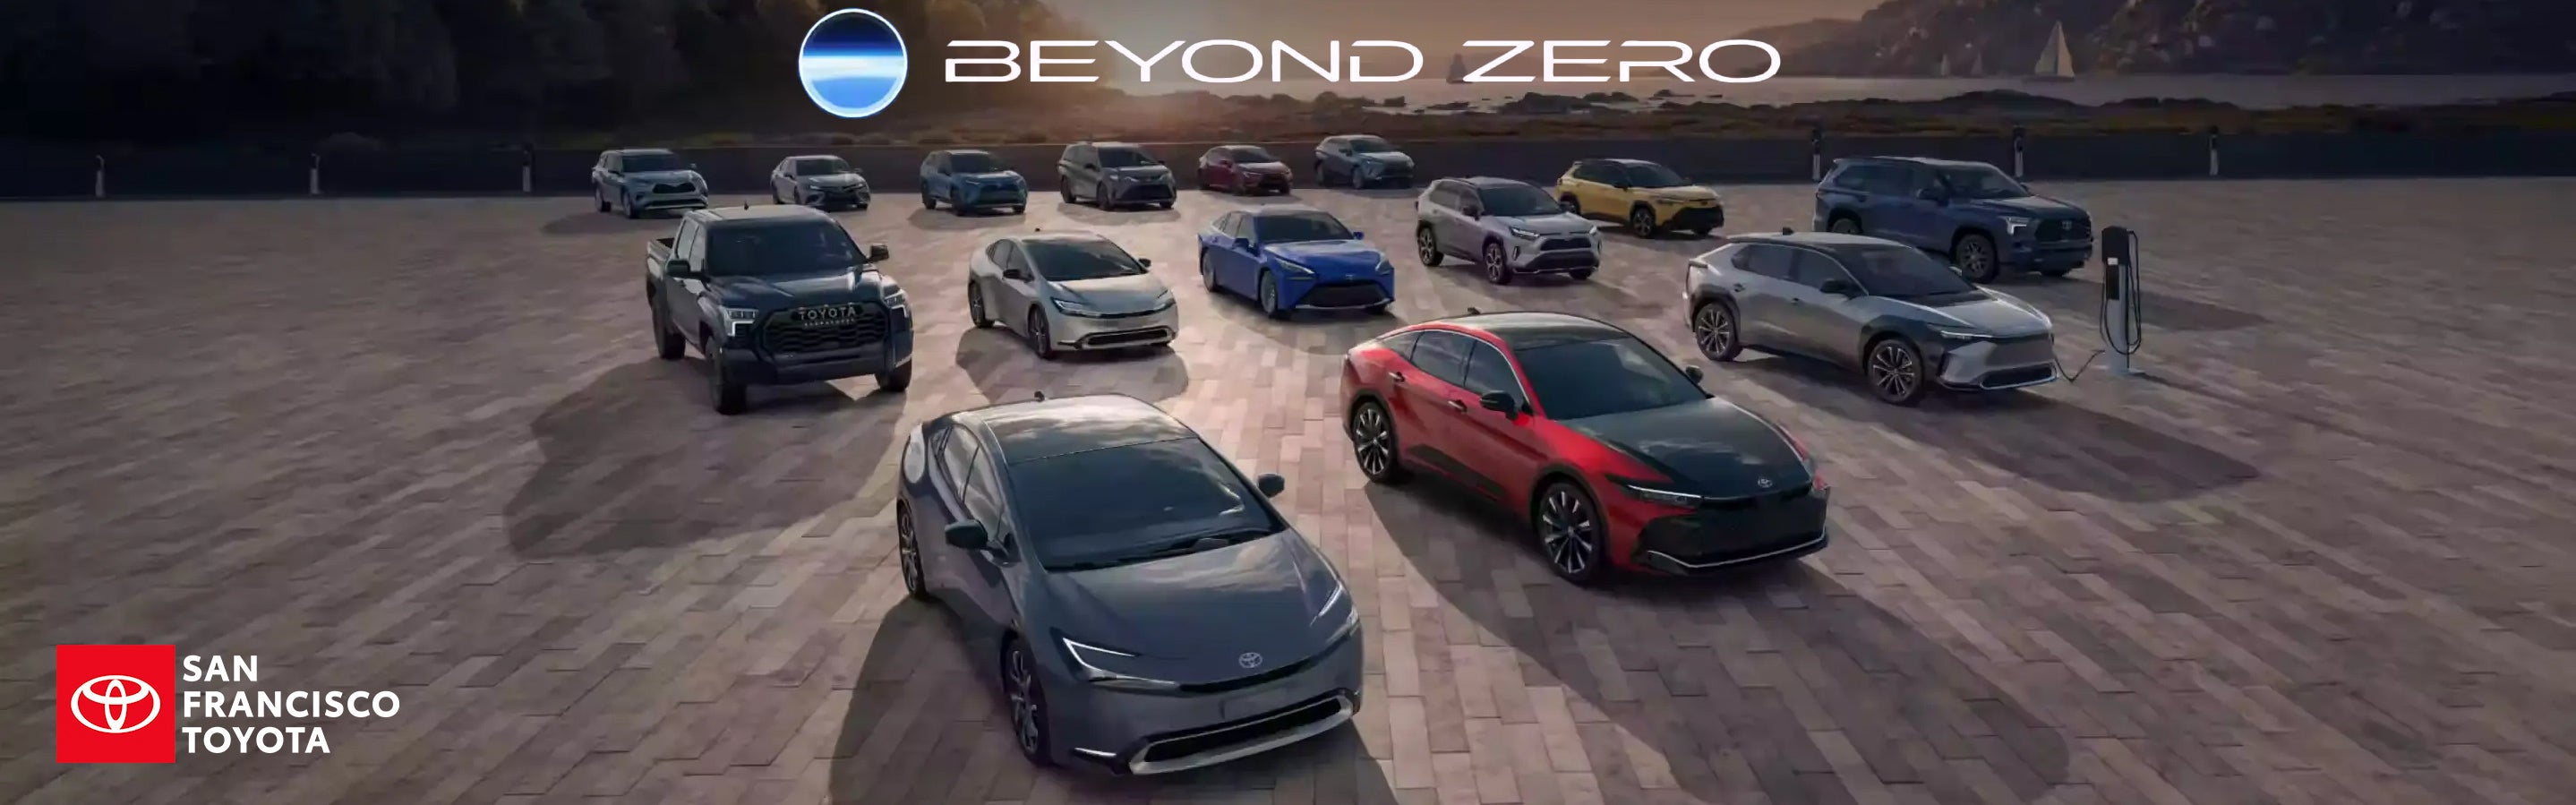 SF Toyota Beyond Zero Electrified